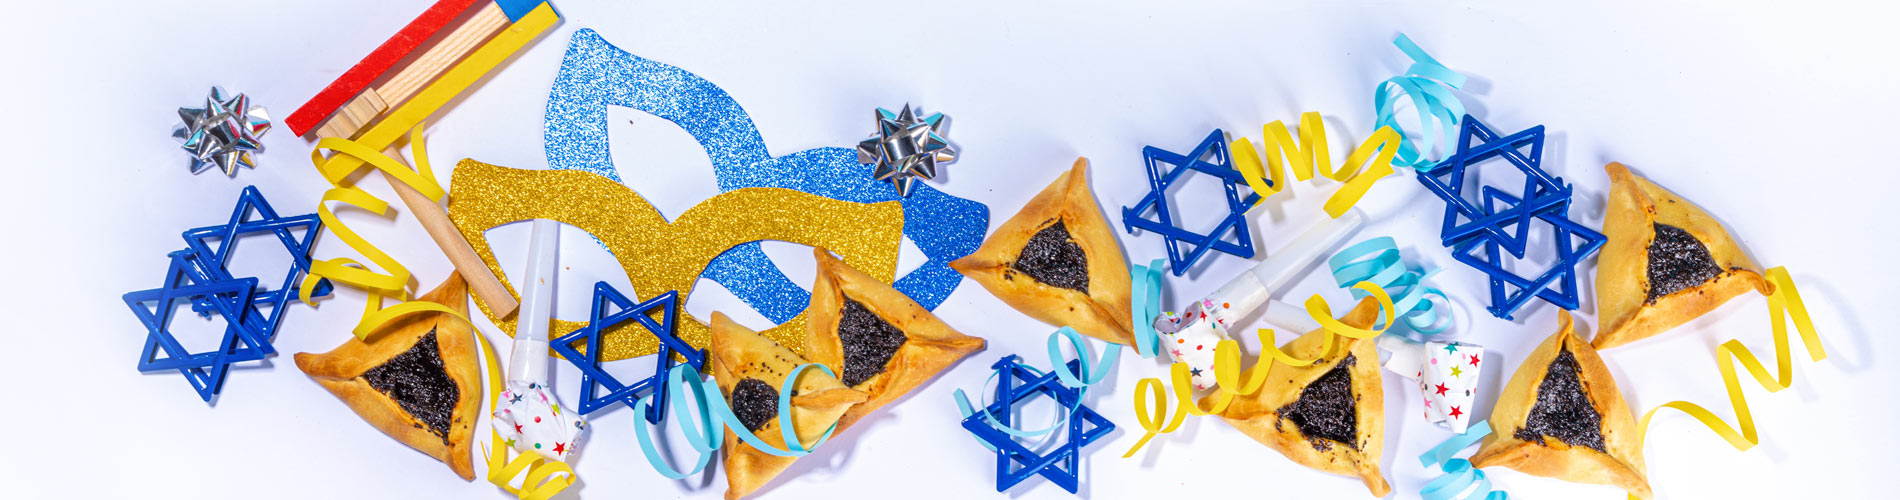 festive Purim background